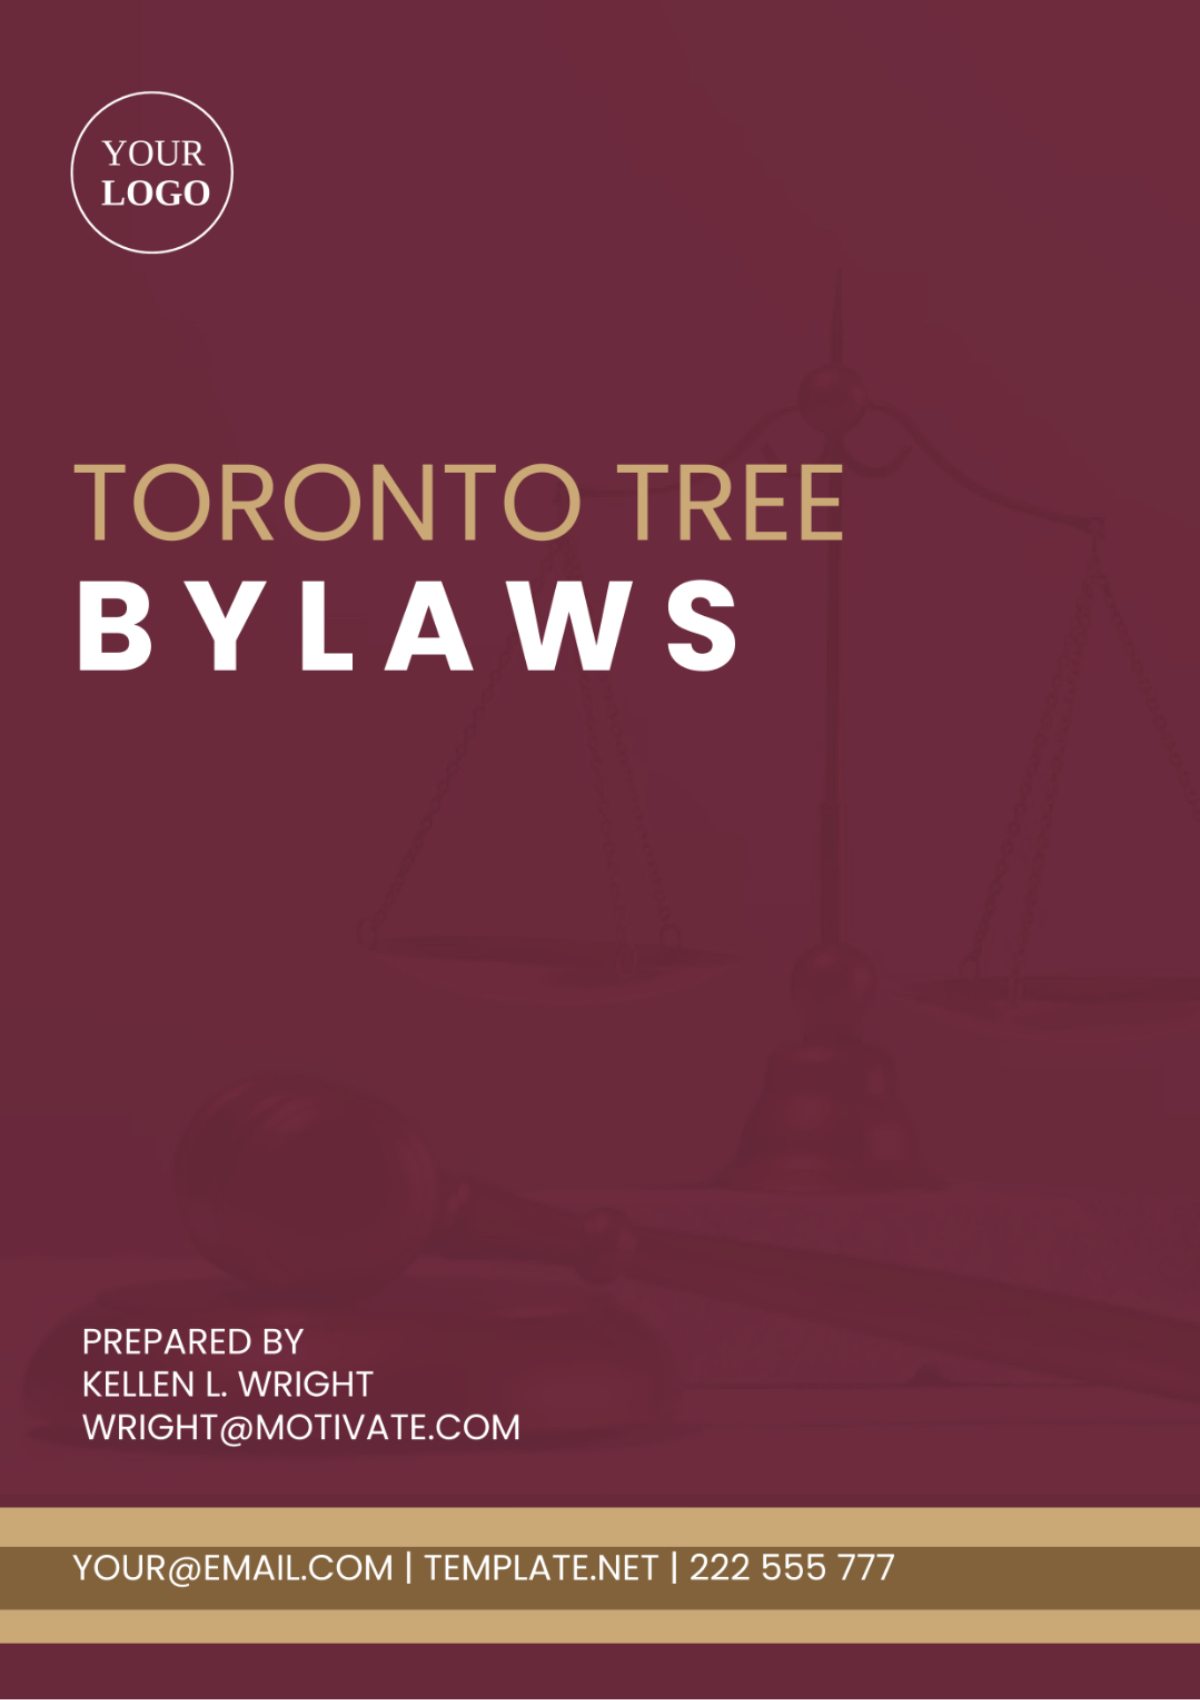 Toronto Tree Bylaws Template